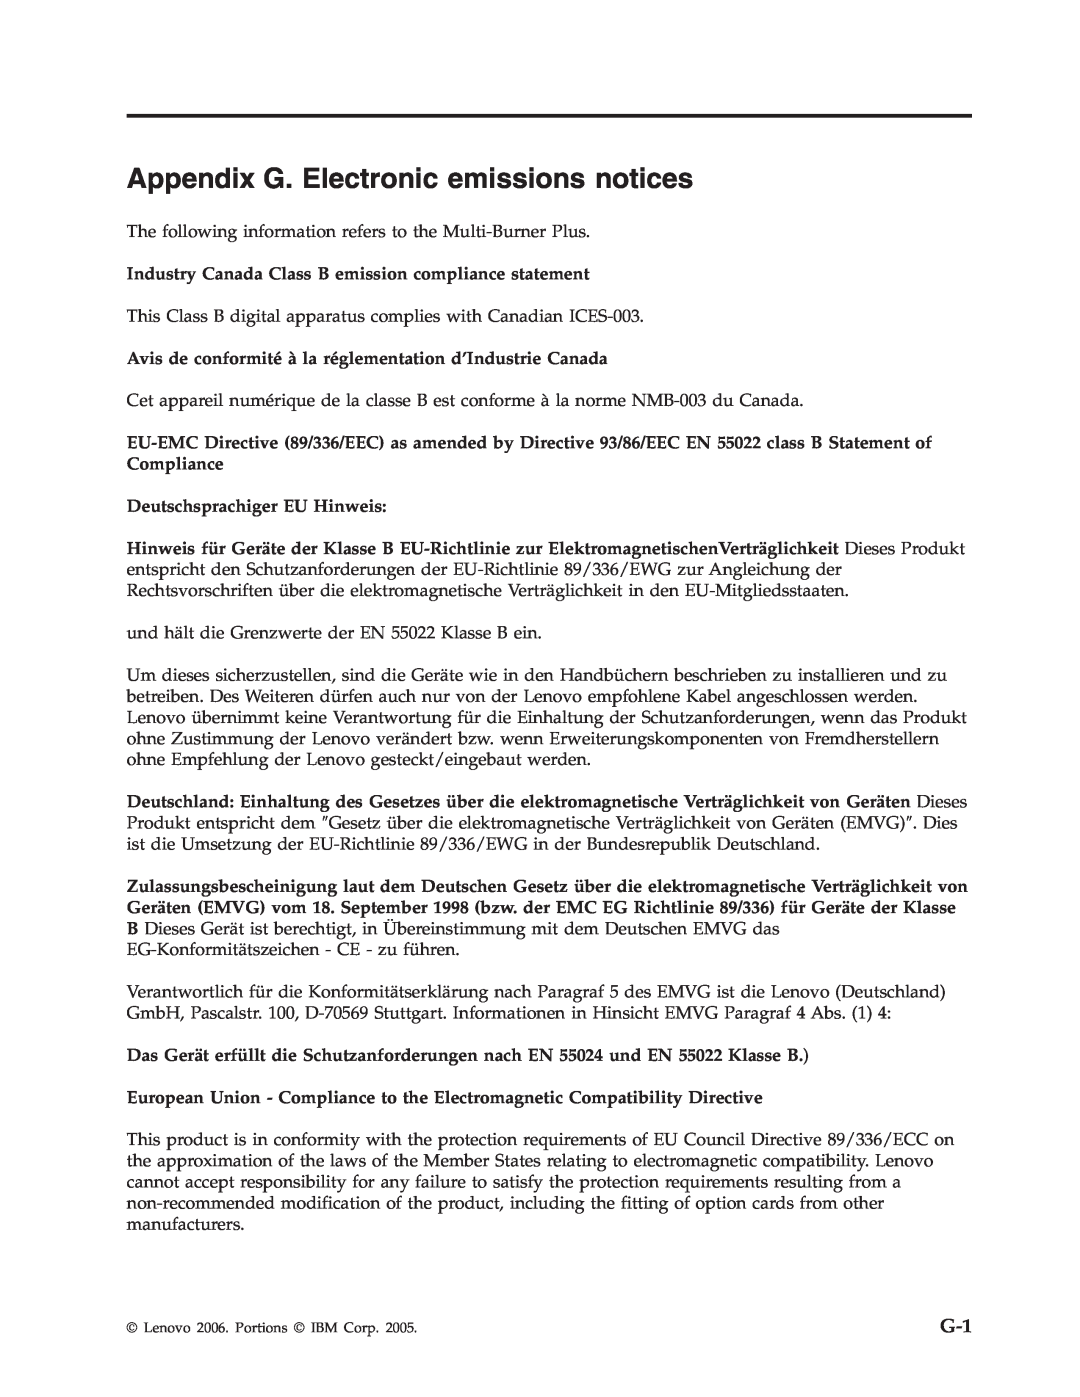 Lenovo 41N5583 manual Appendix G. Electronic emissions notices, Deutschsprachiger EU Hinweis 